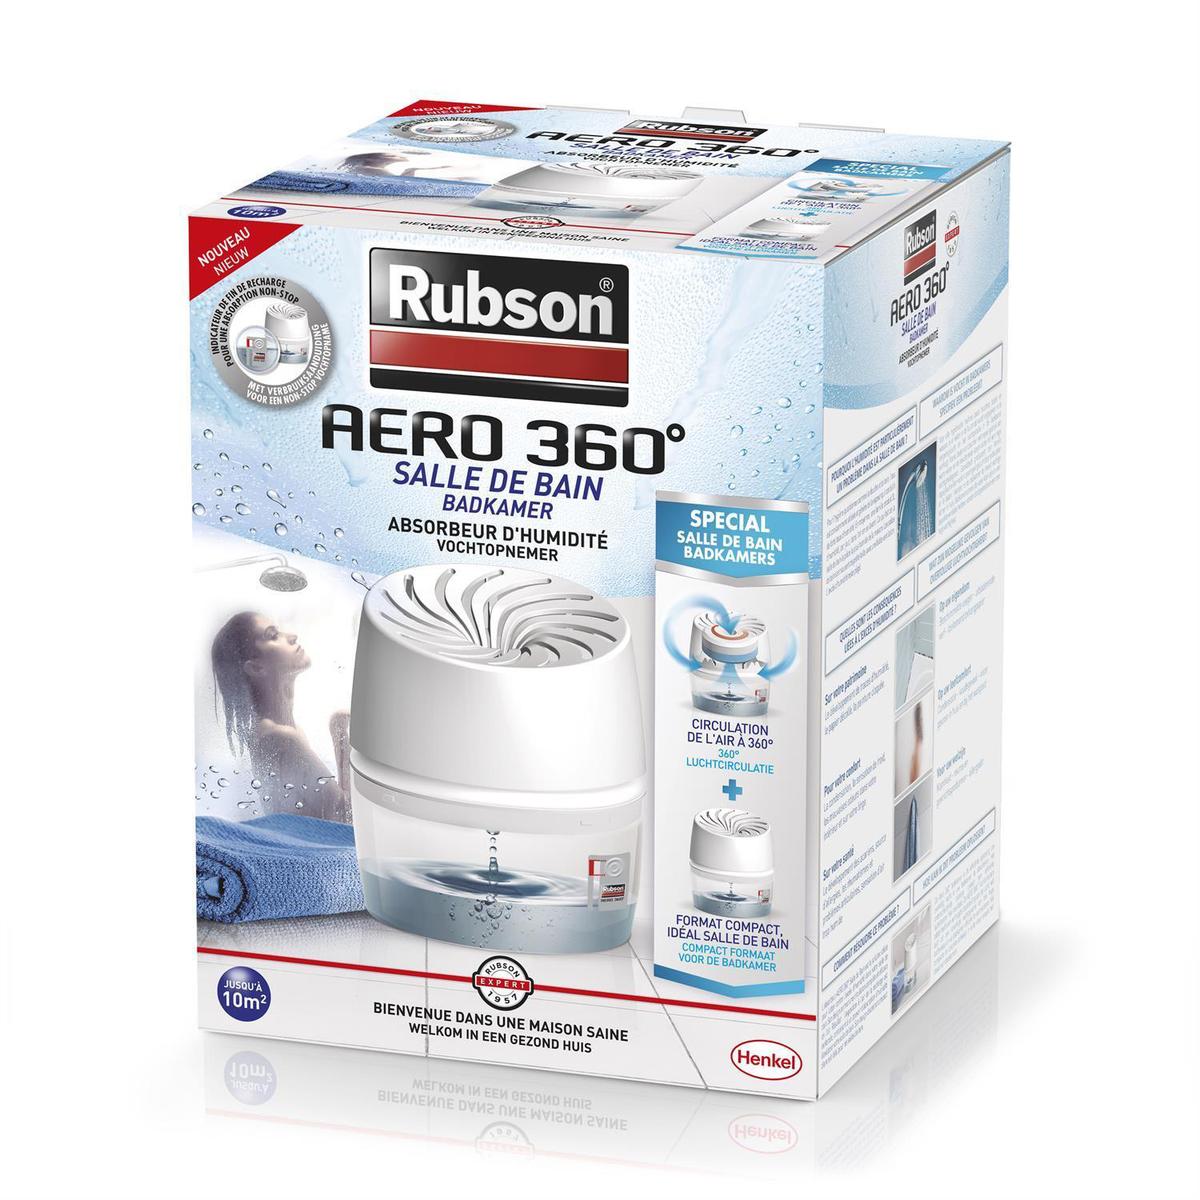 Absorbeur d'humidité Aero 360° avec recharge vanille RUBSON